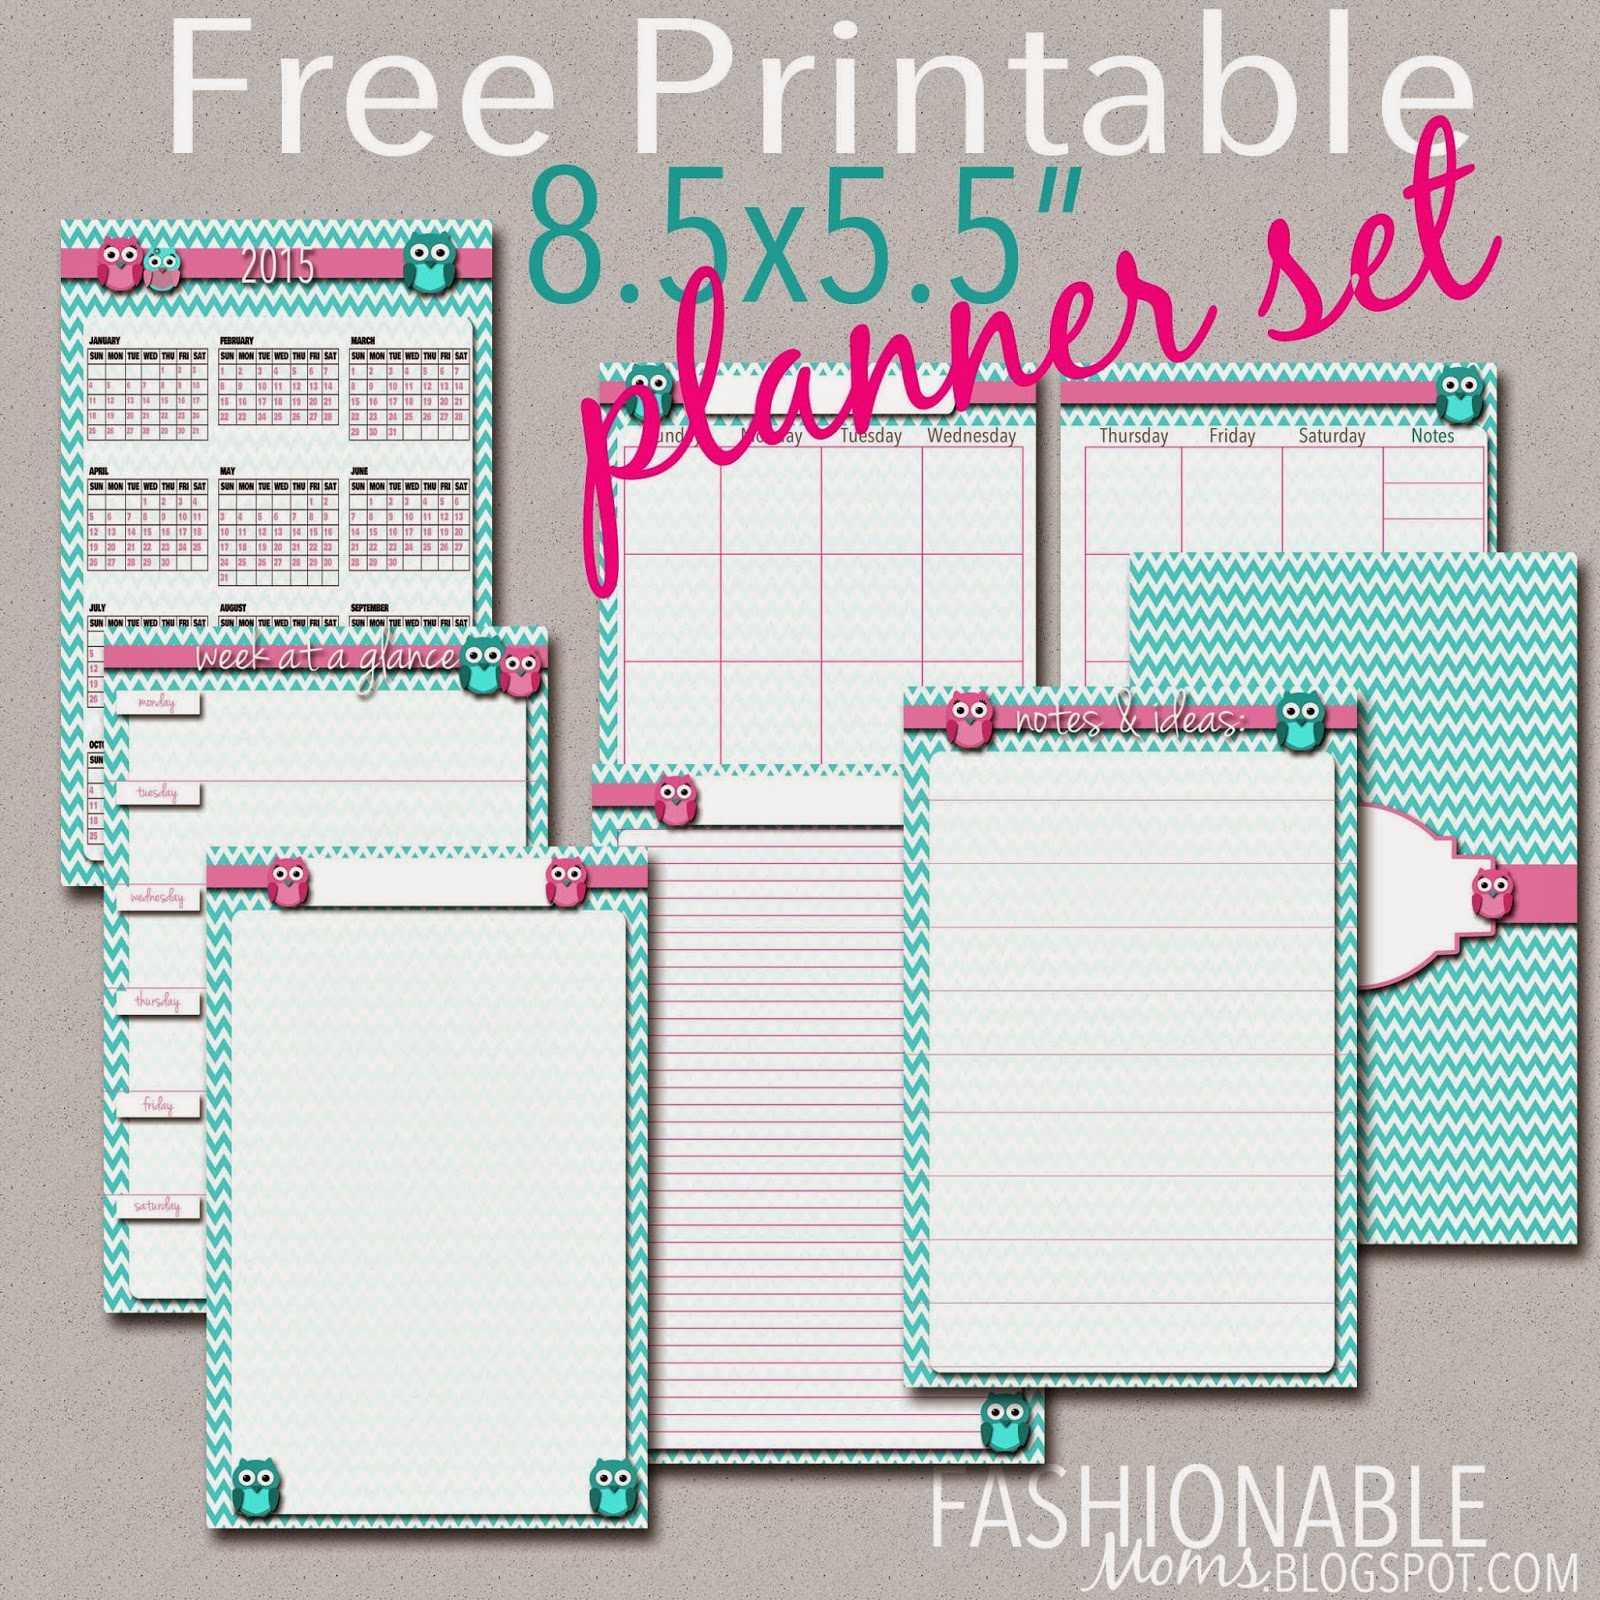 Fashionable Moms Free Printable Half Page Owl Planner Set